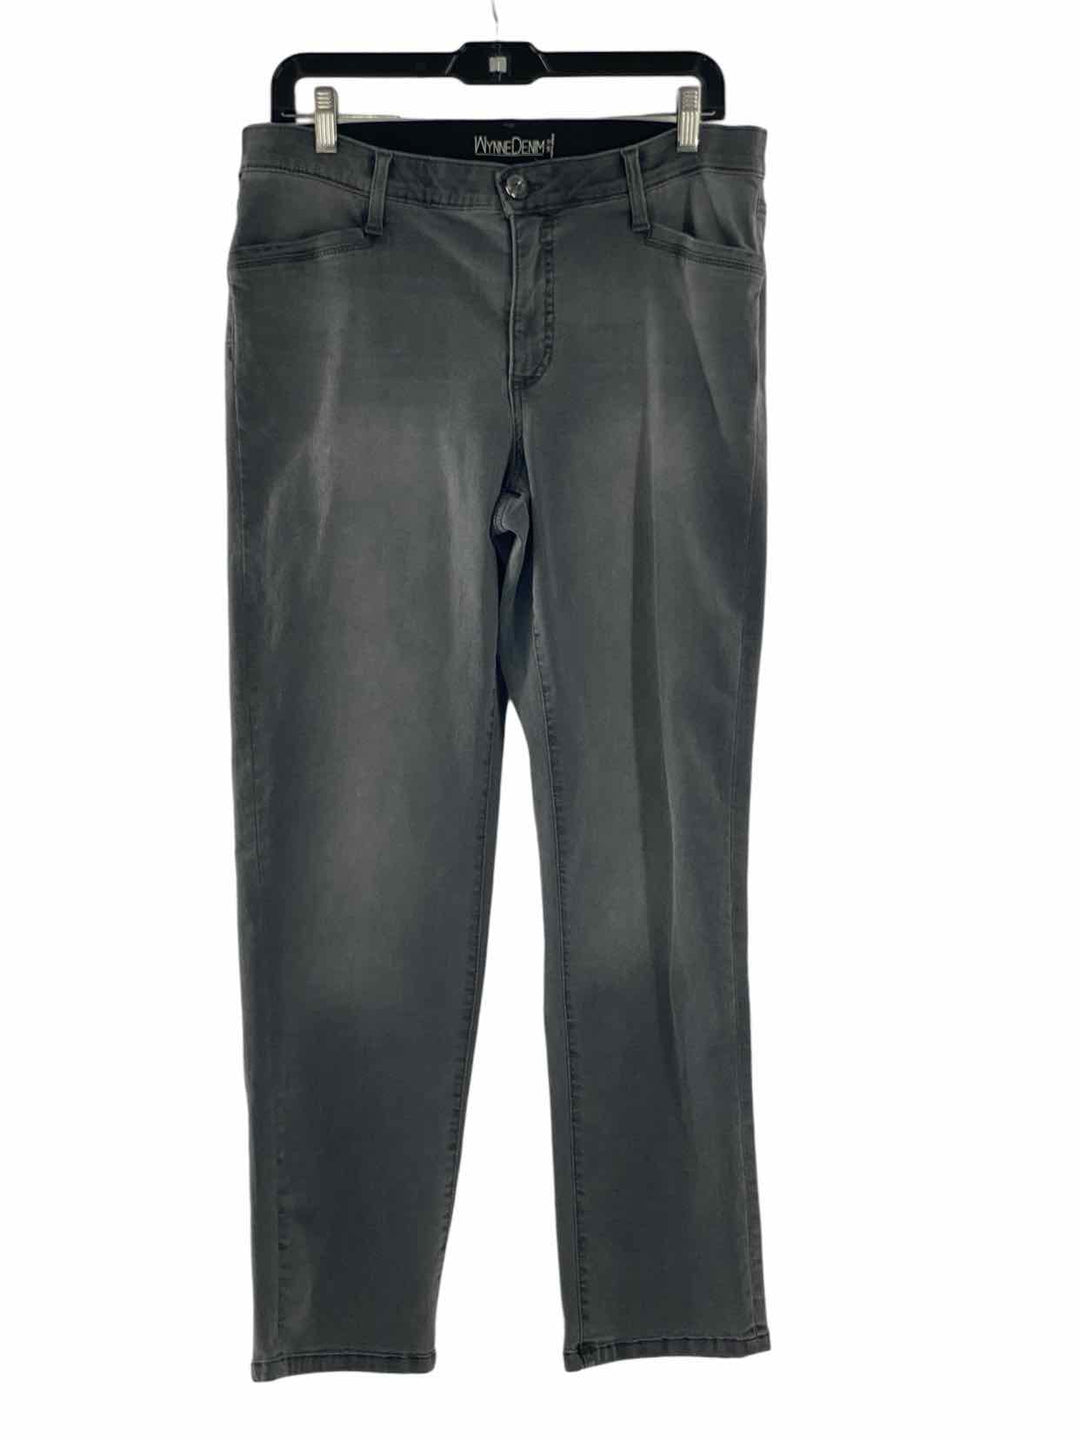 Wynne Layers Size 12 Gray Jeans